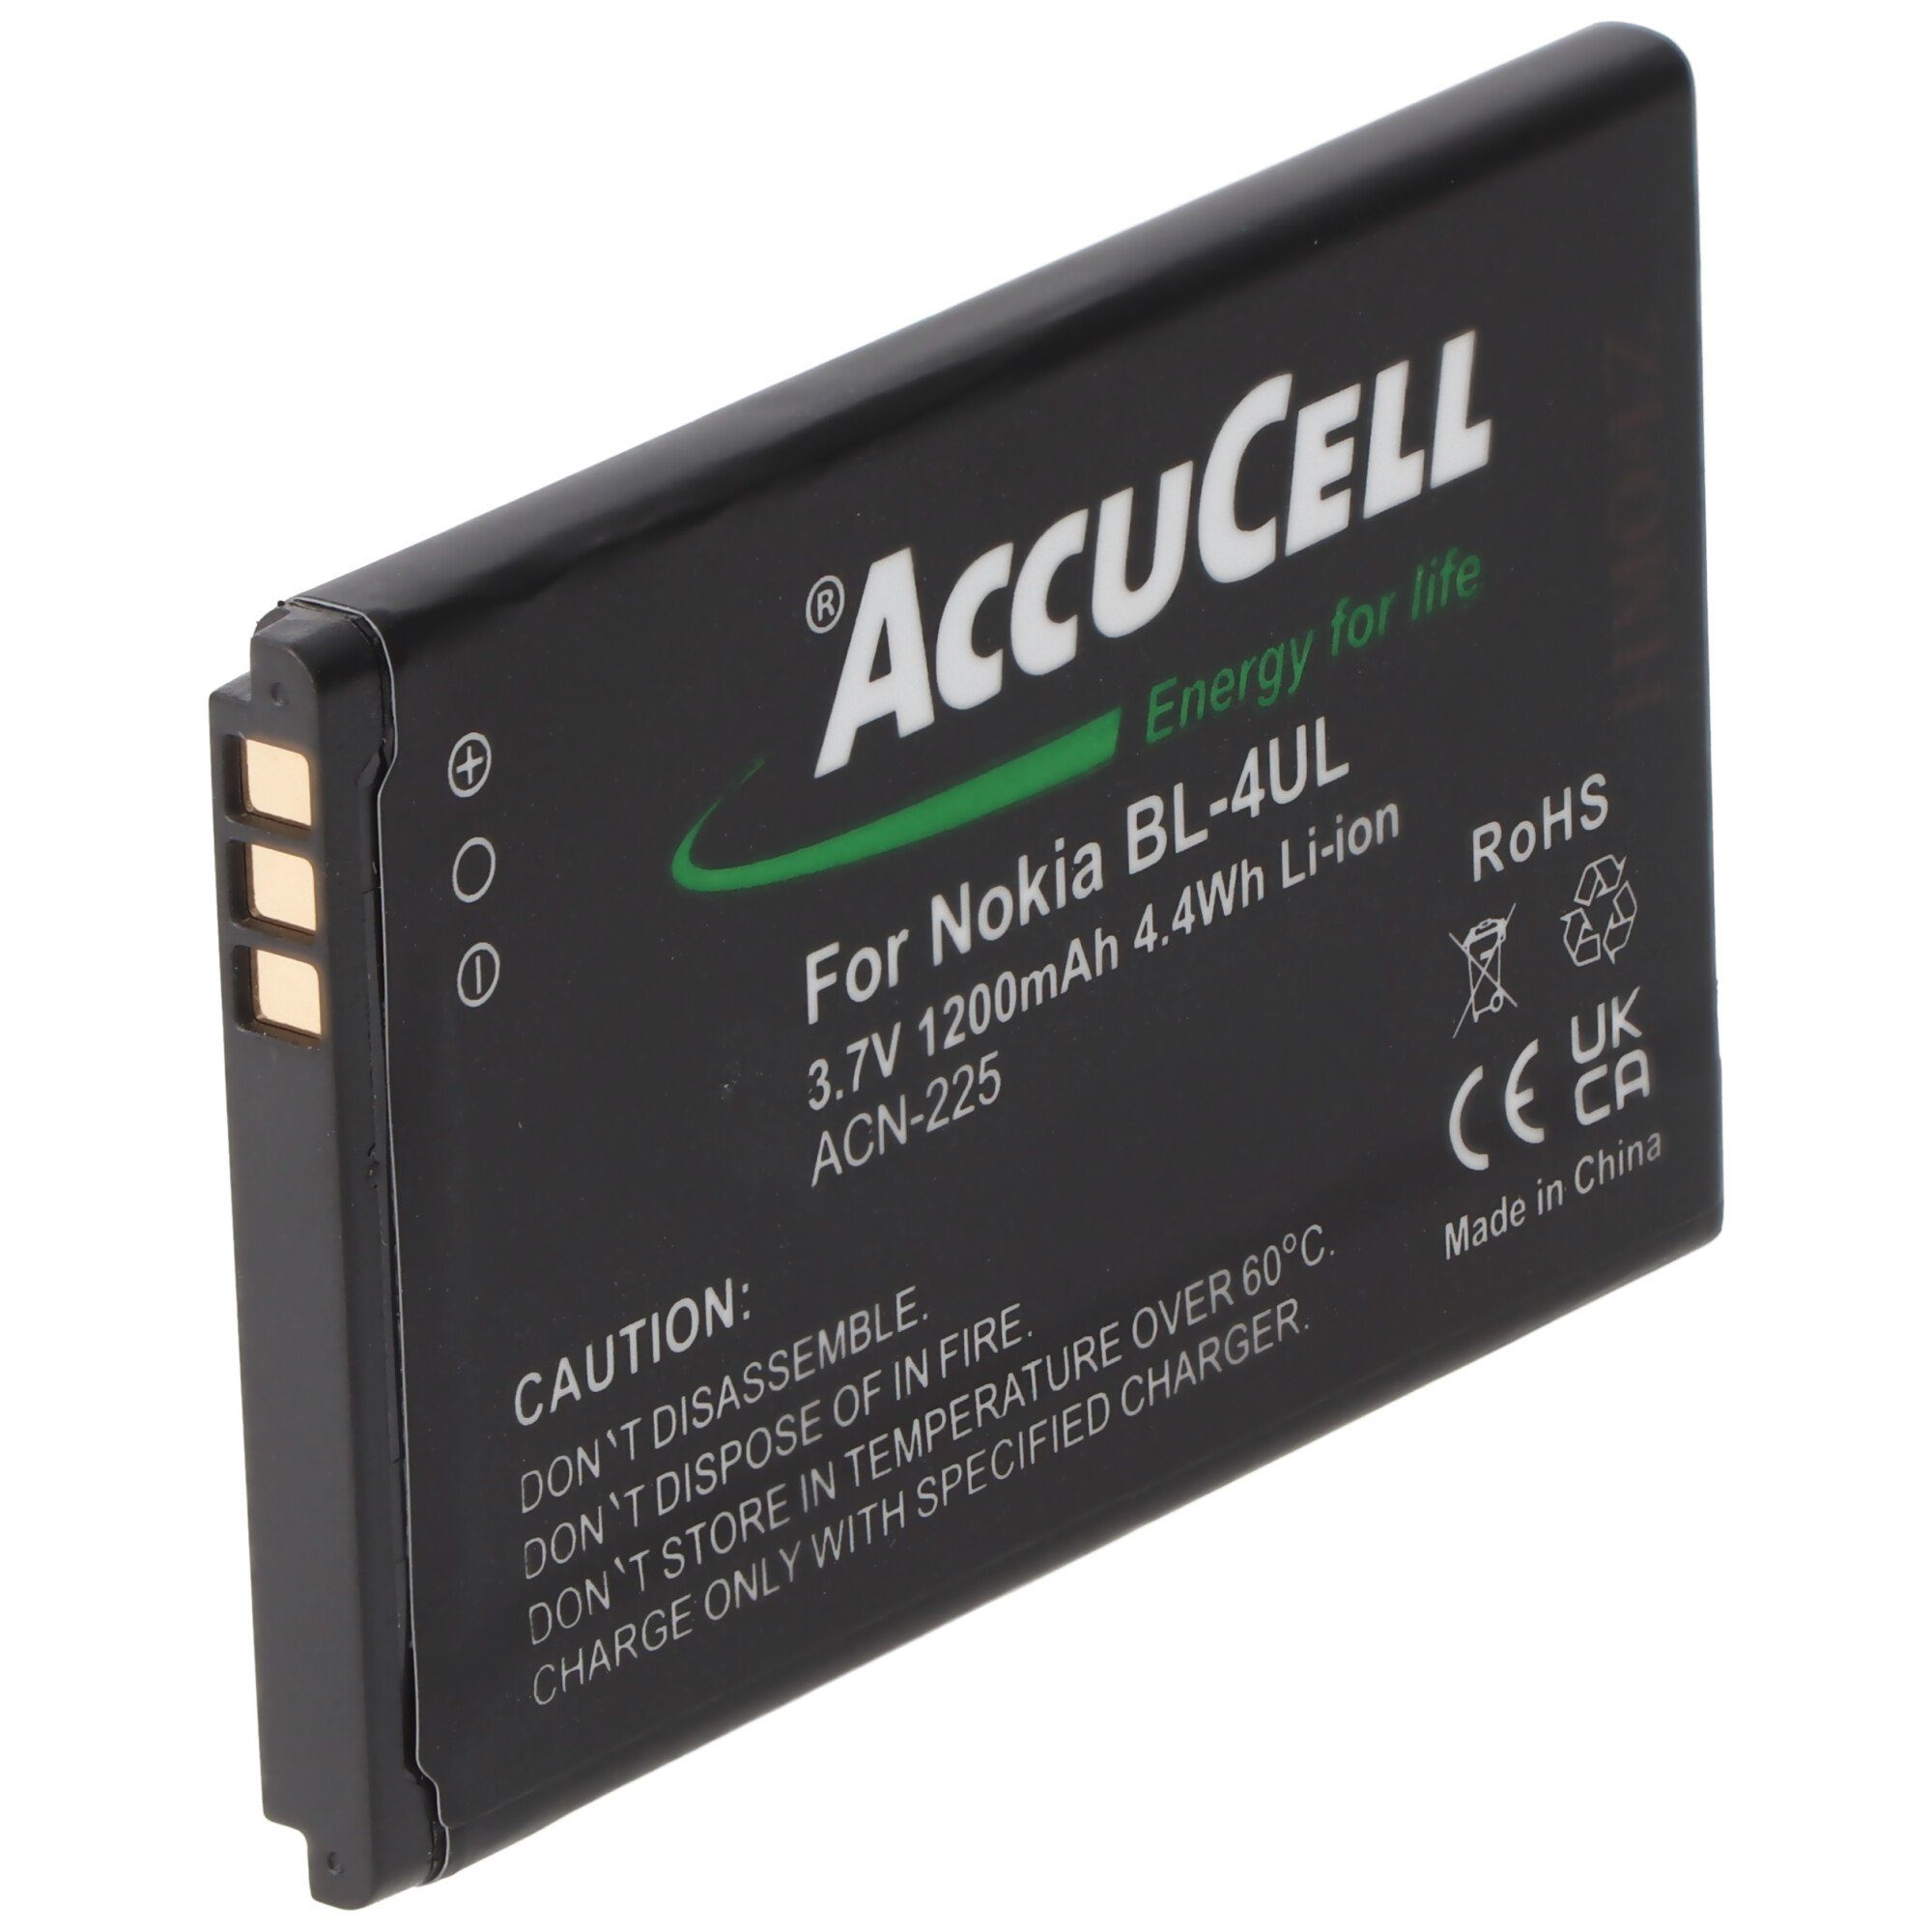 AccuCell Li-ion-Akku passend für den Nokia Akku BL-4UL und Nokia Lumia 225, As Akku 1200 mAh (3,7 V)